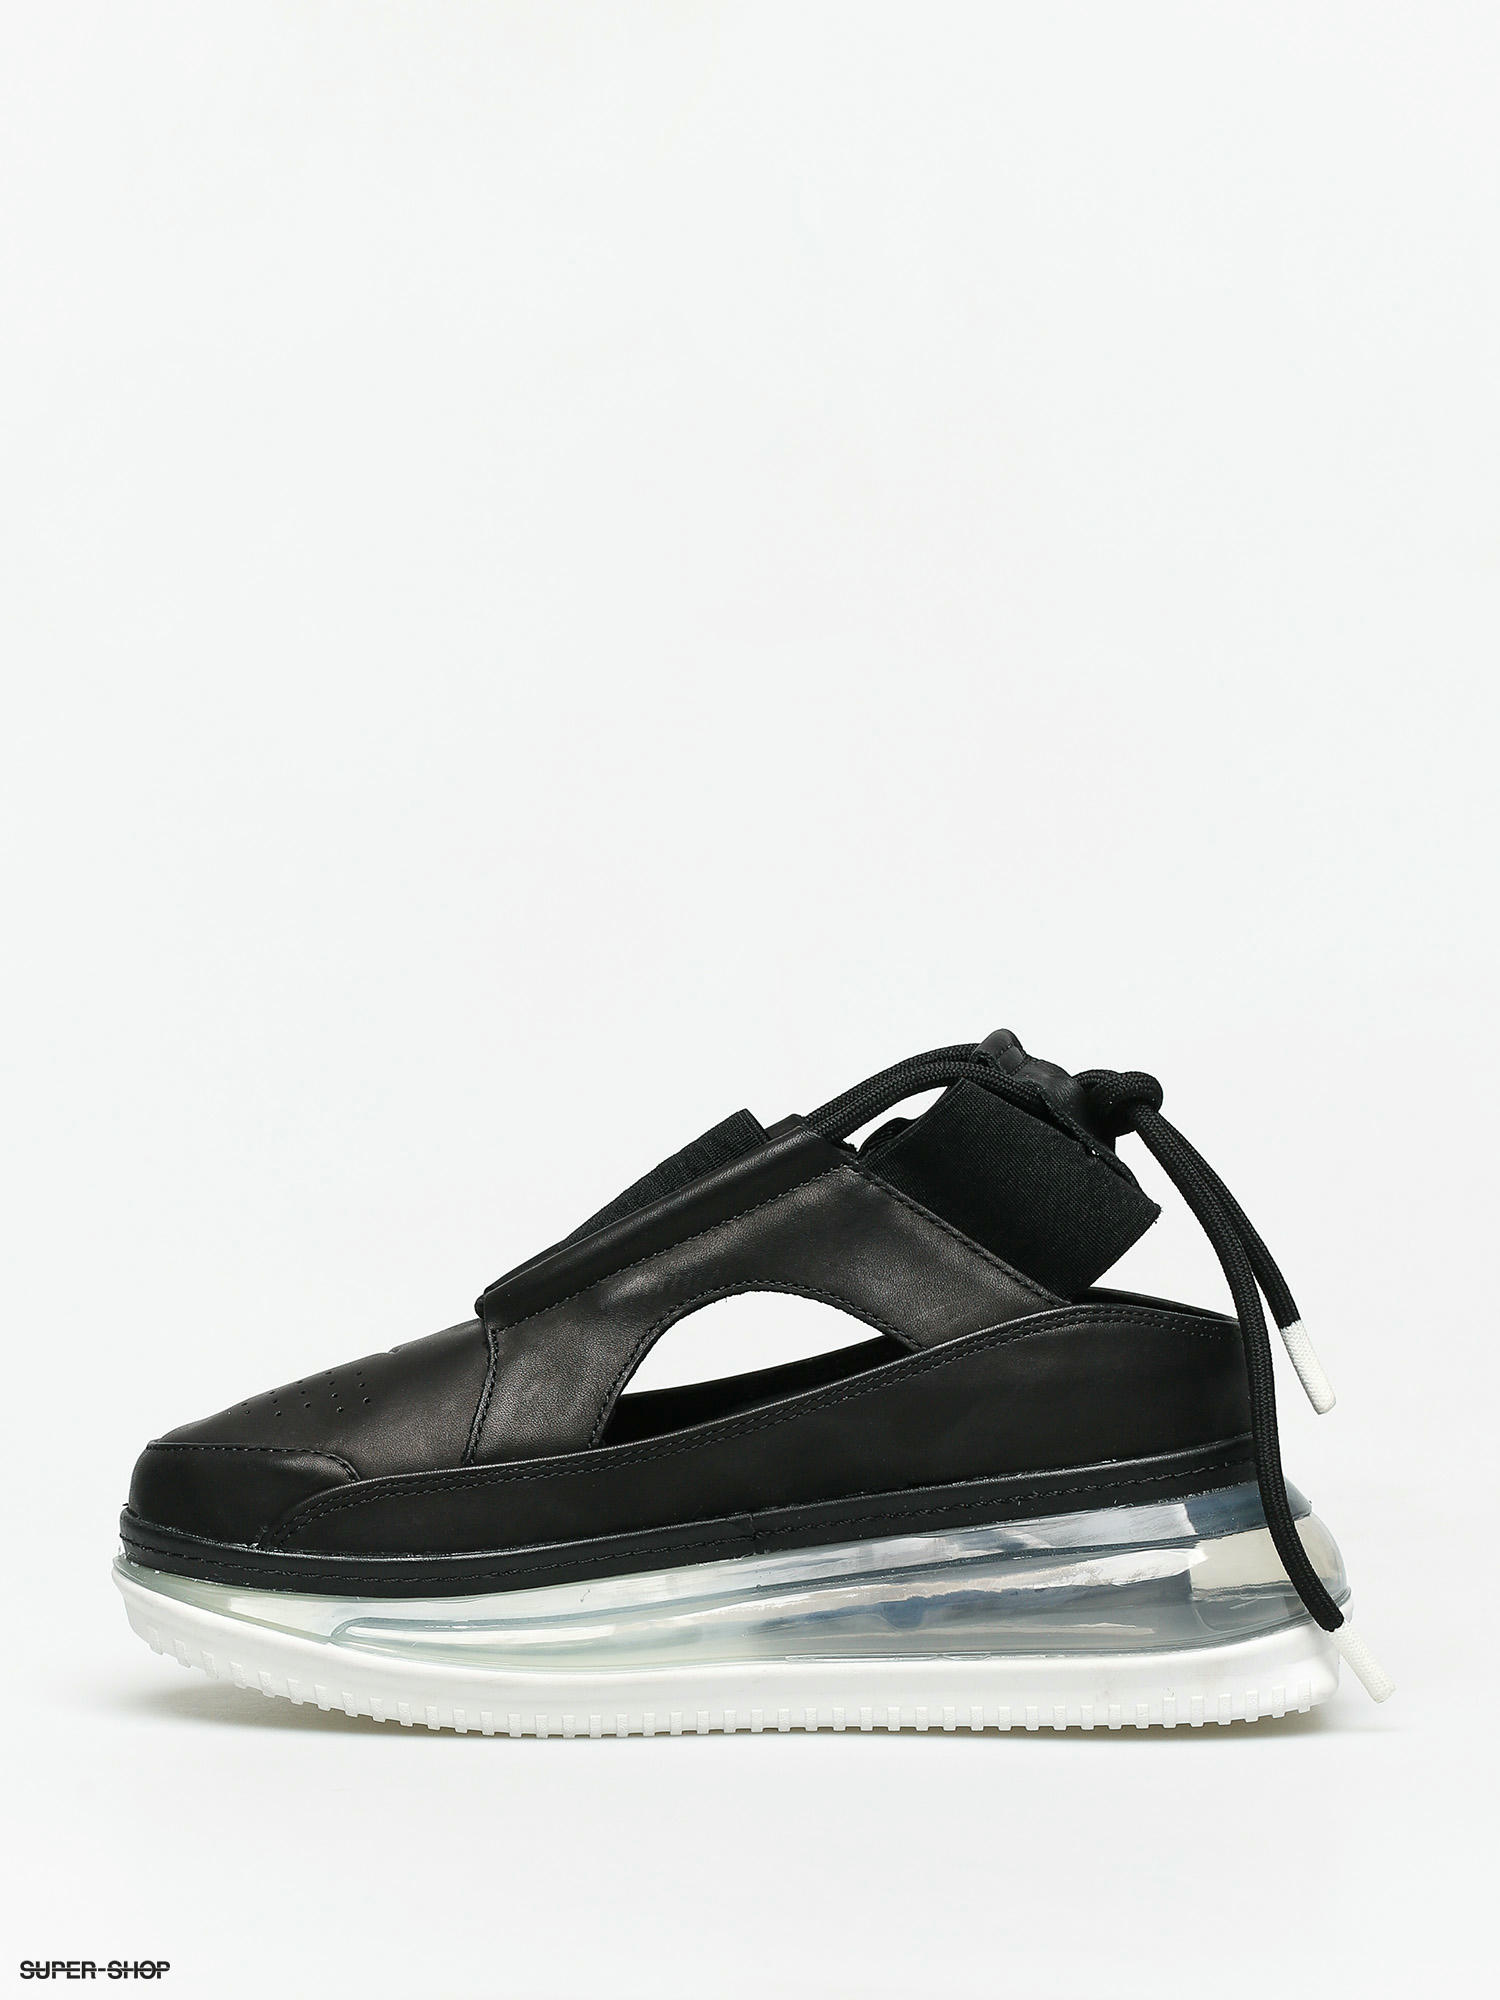 Antibiotica rijk premie Nike Air Max FF 720 Shoes Wmn (black/black royal pulse summit white)